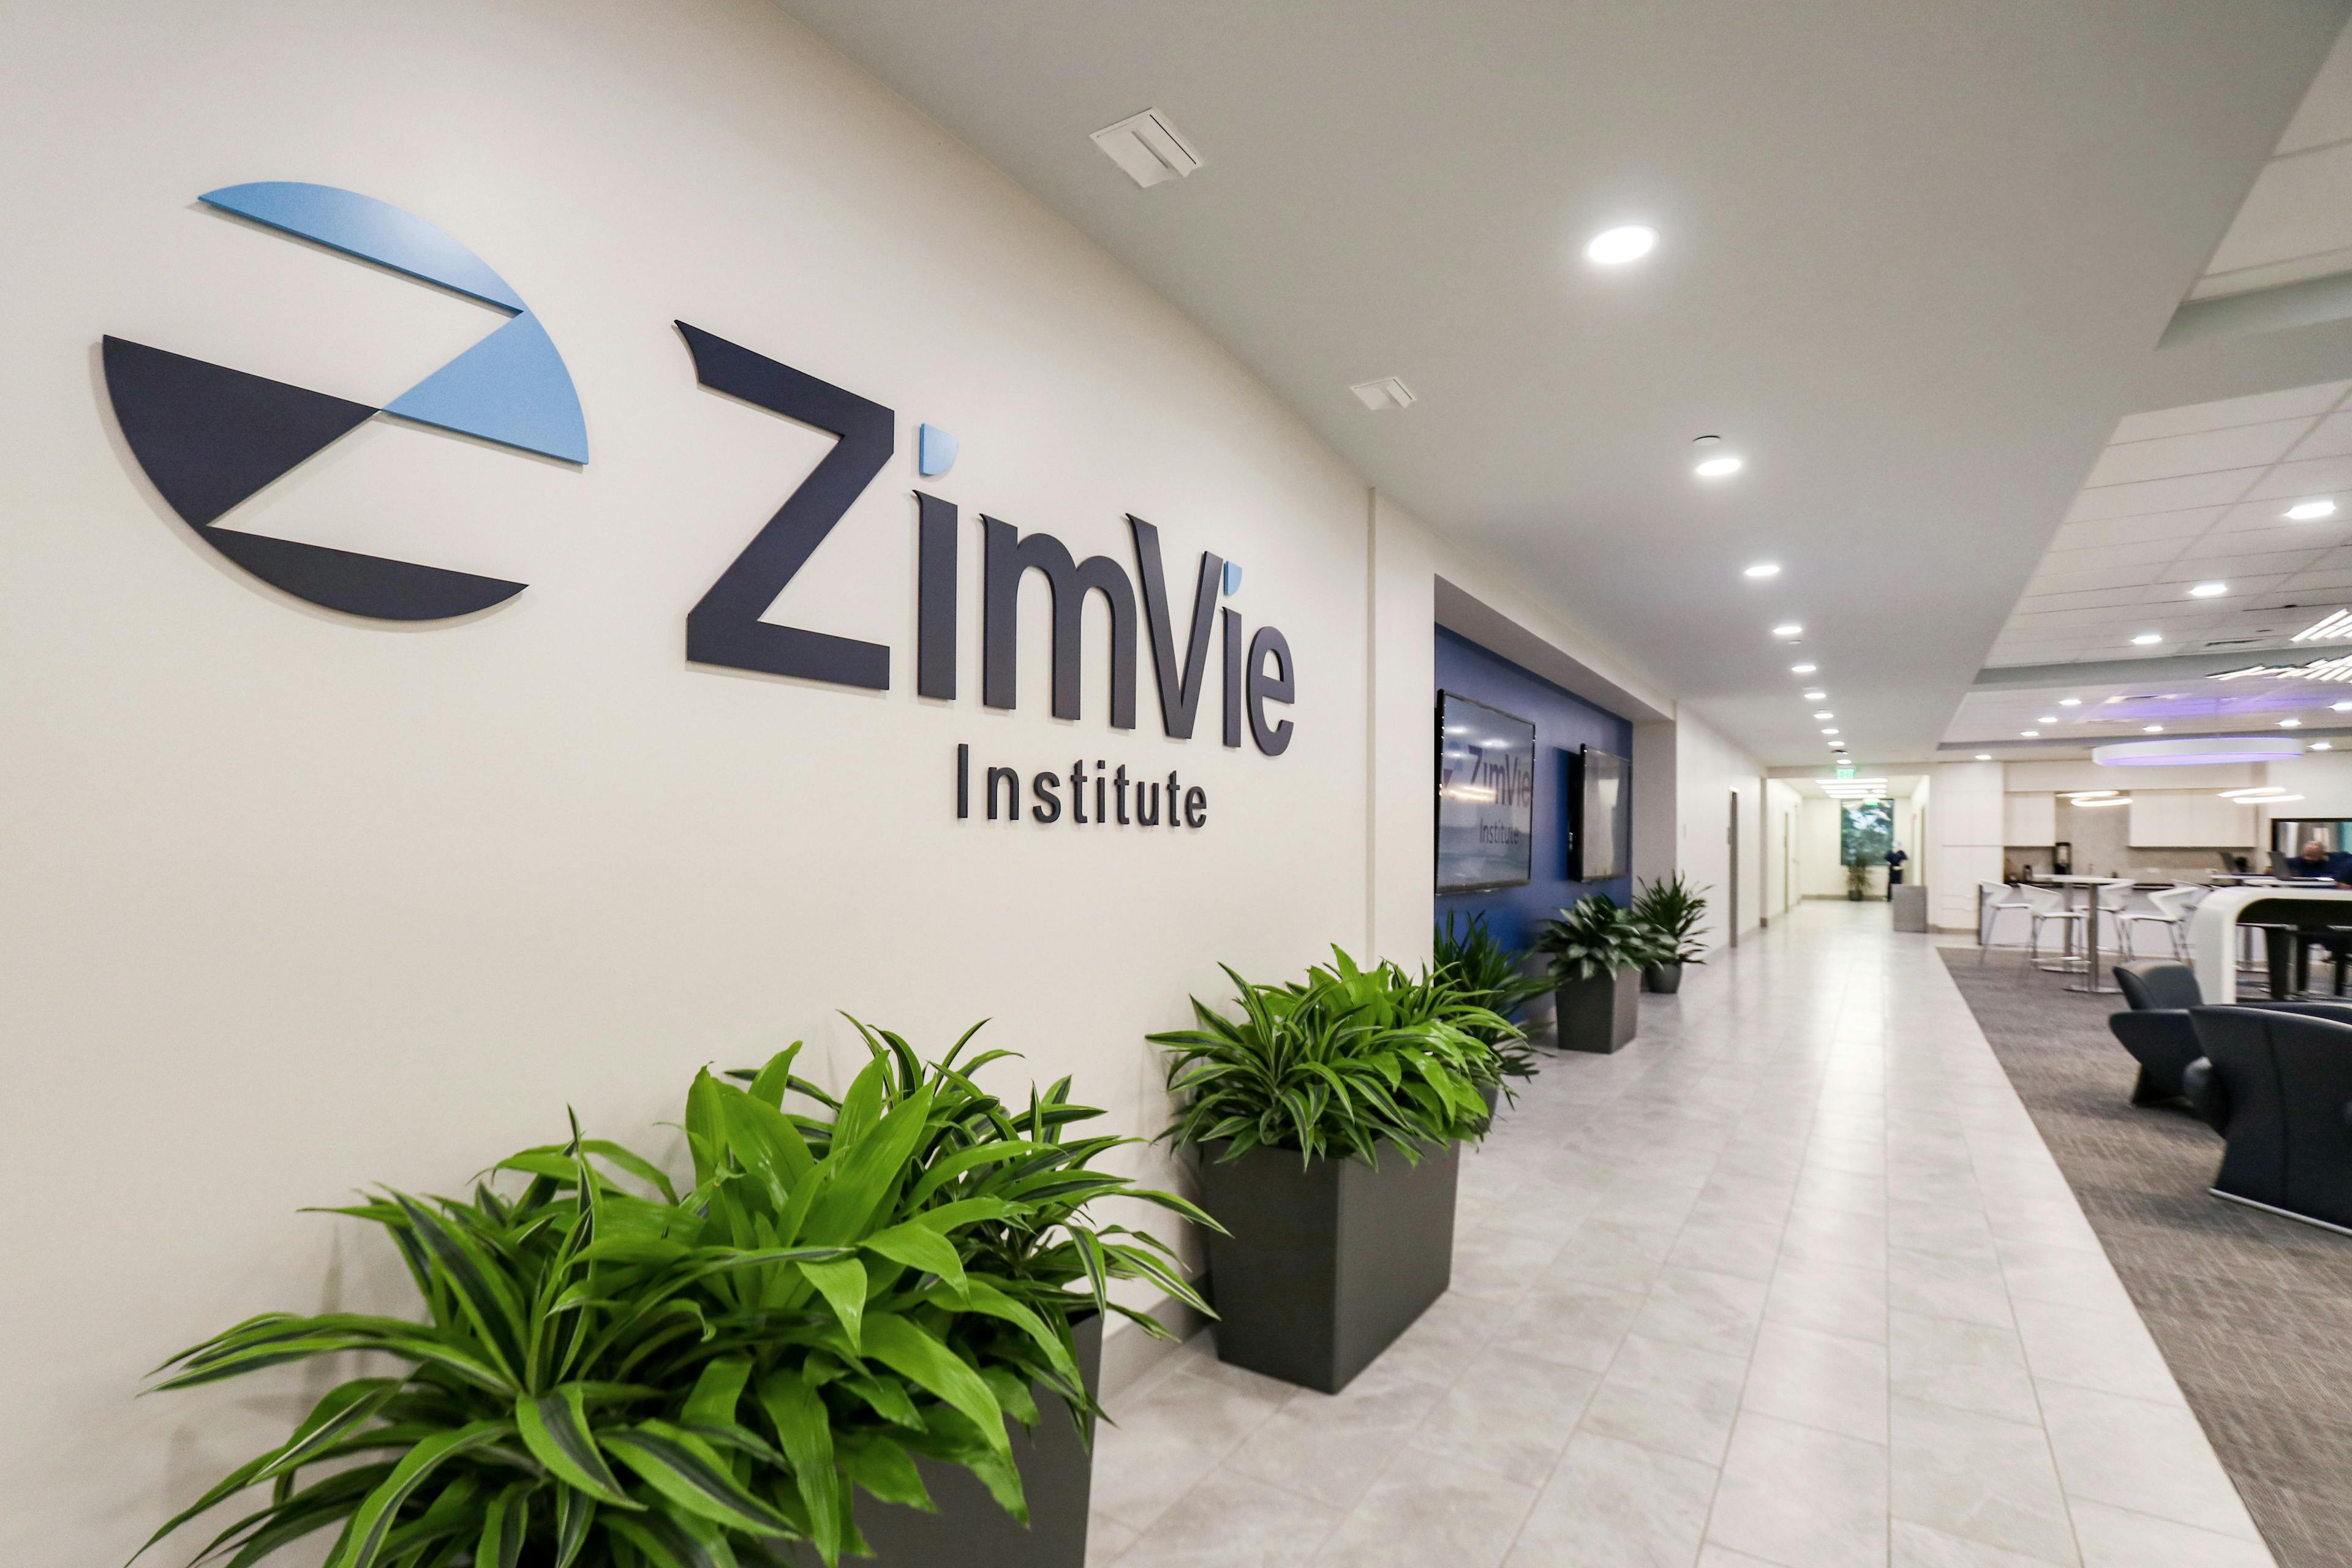 ZimVie Institute South